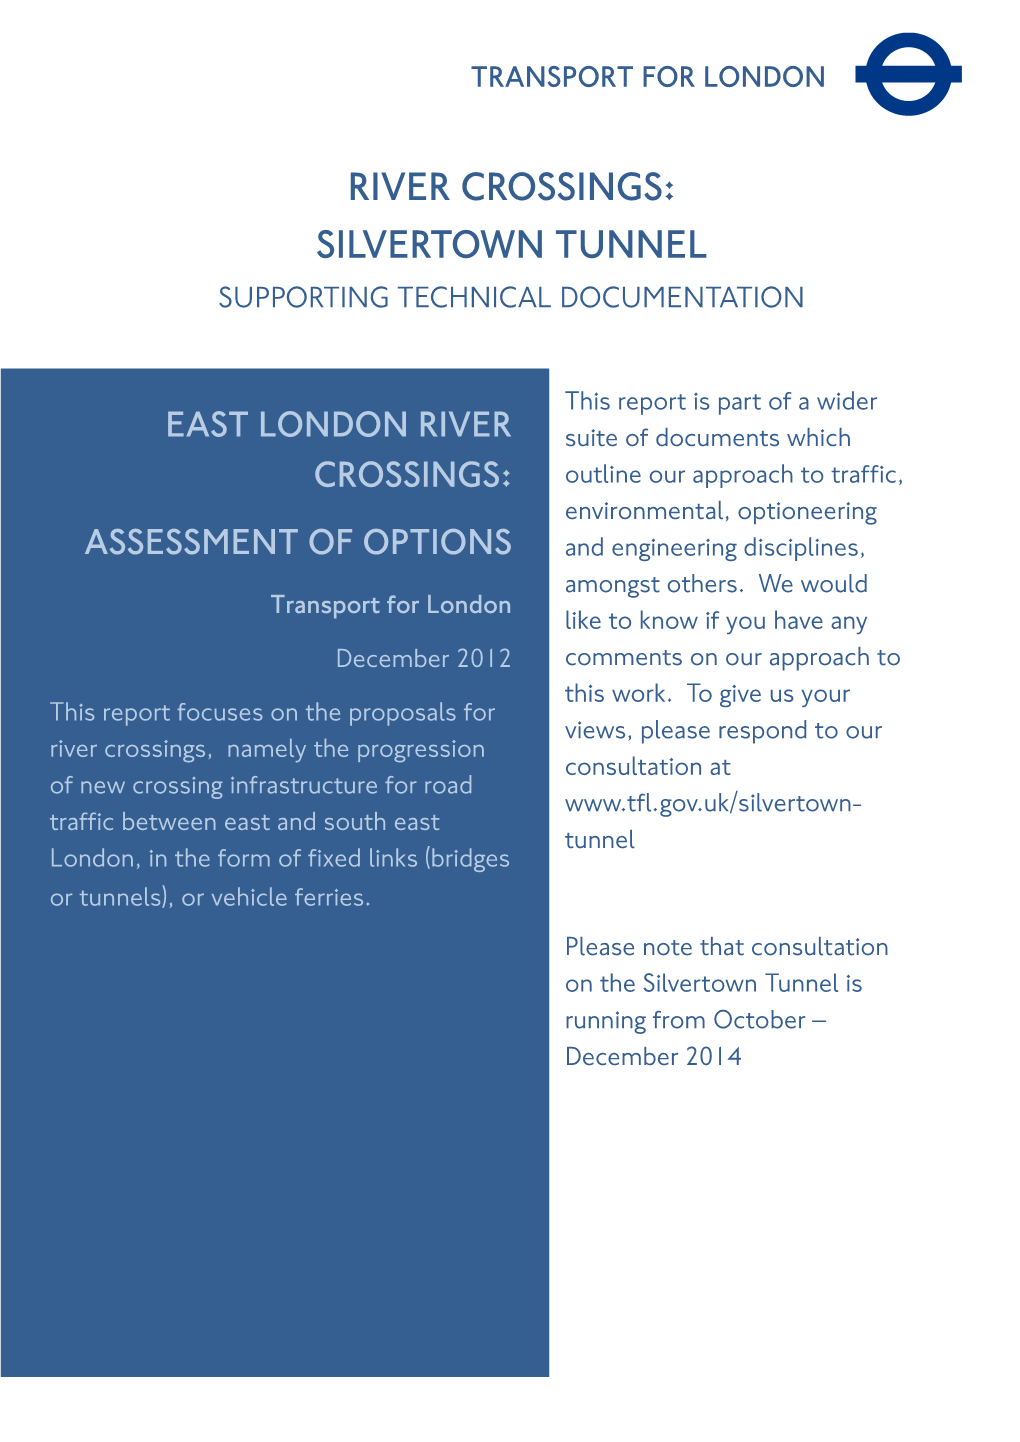 East London River Crossings: Assessment of Options